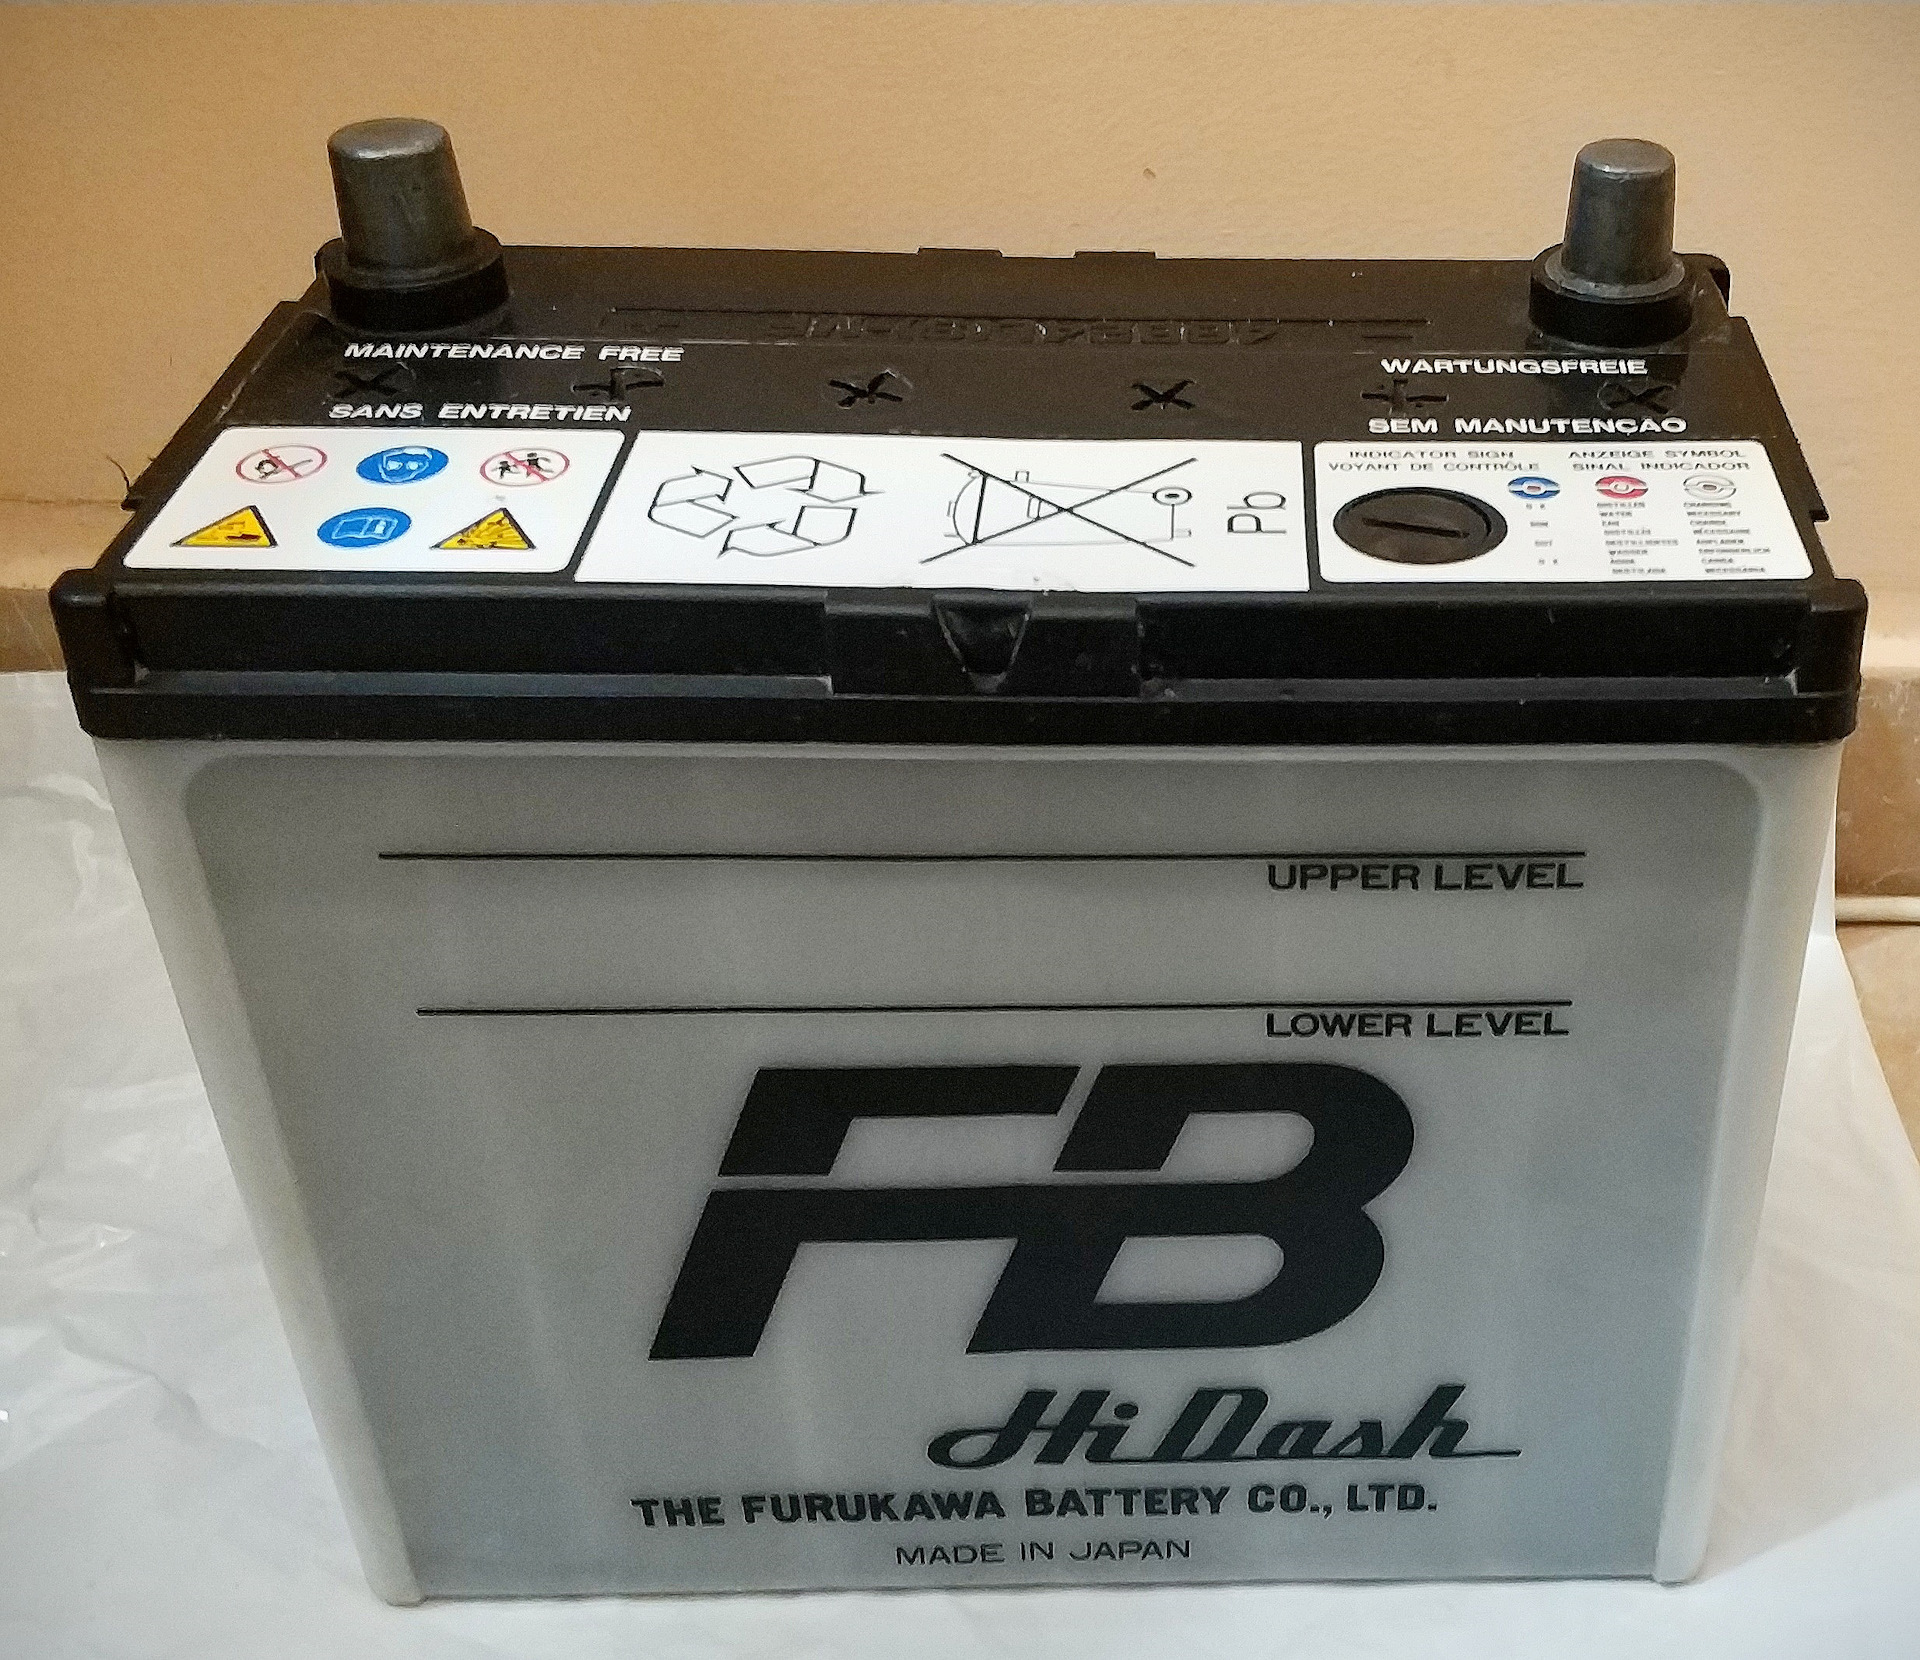 Data battery. 105d31l АКБ fb. АКБ Хонда Баттери. Furukawa Battery артикул 105d31r. Furukawa Battery 85d26l аккумулятор.